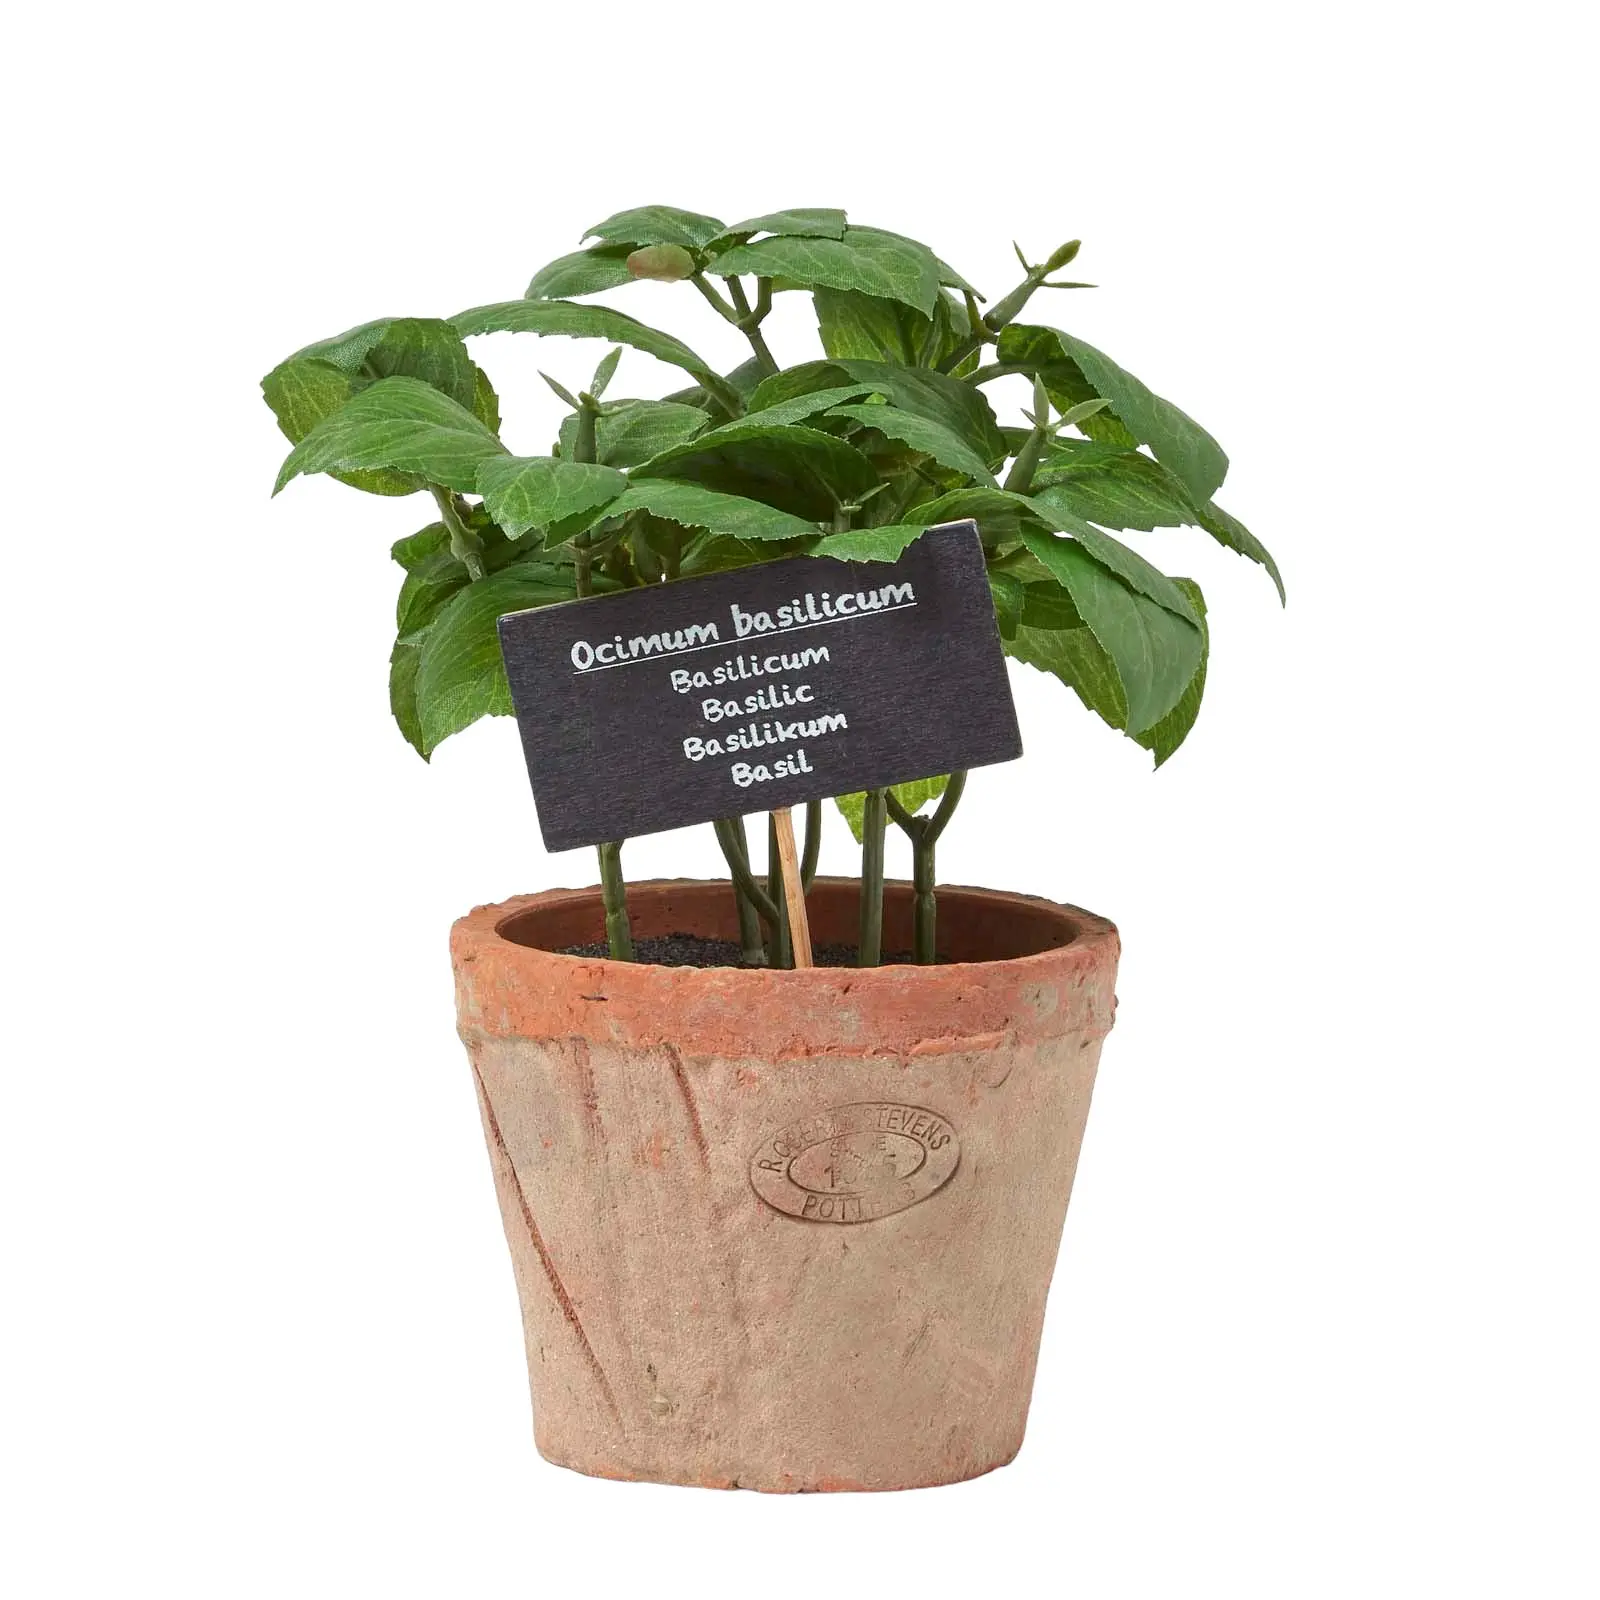 Basilikum-Topfpflanze K眉nstliche